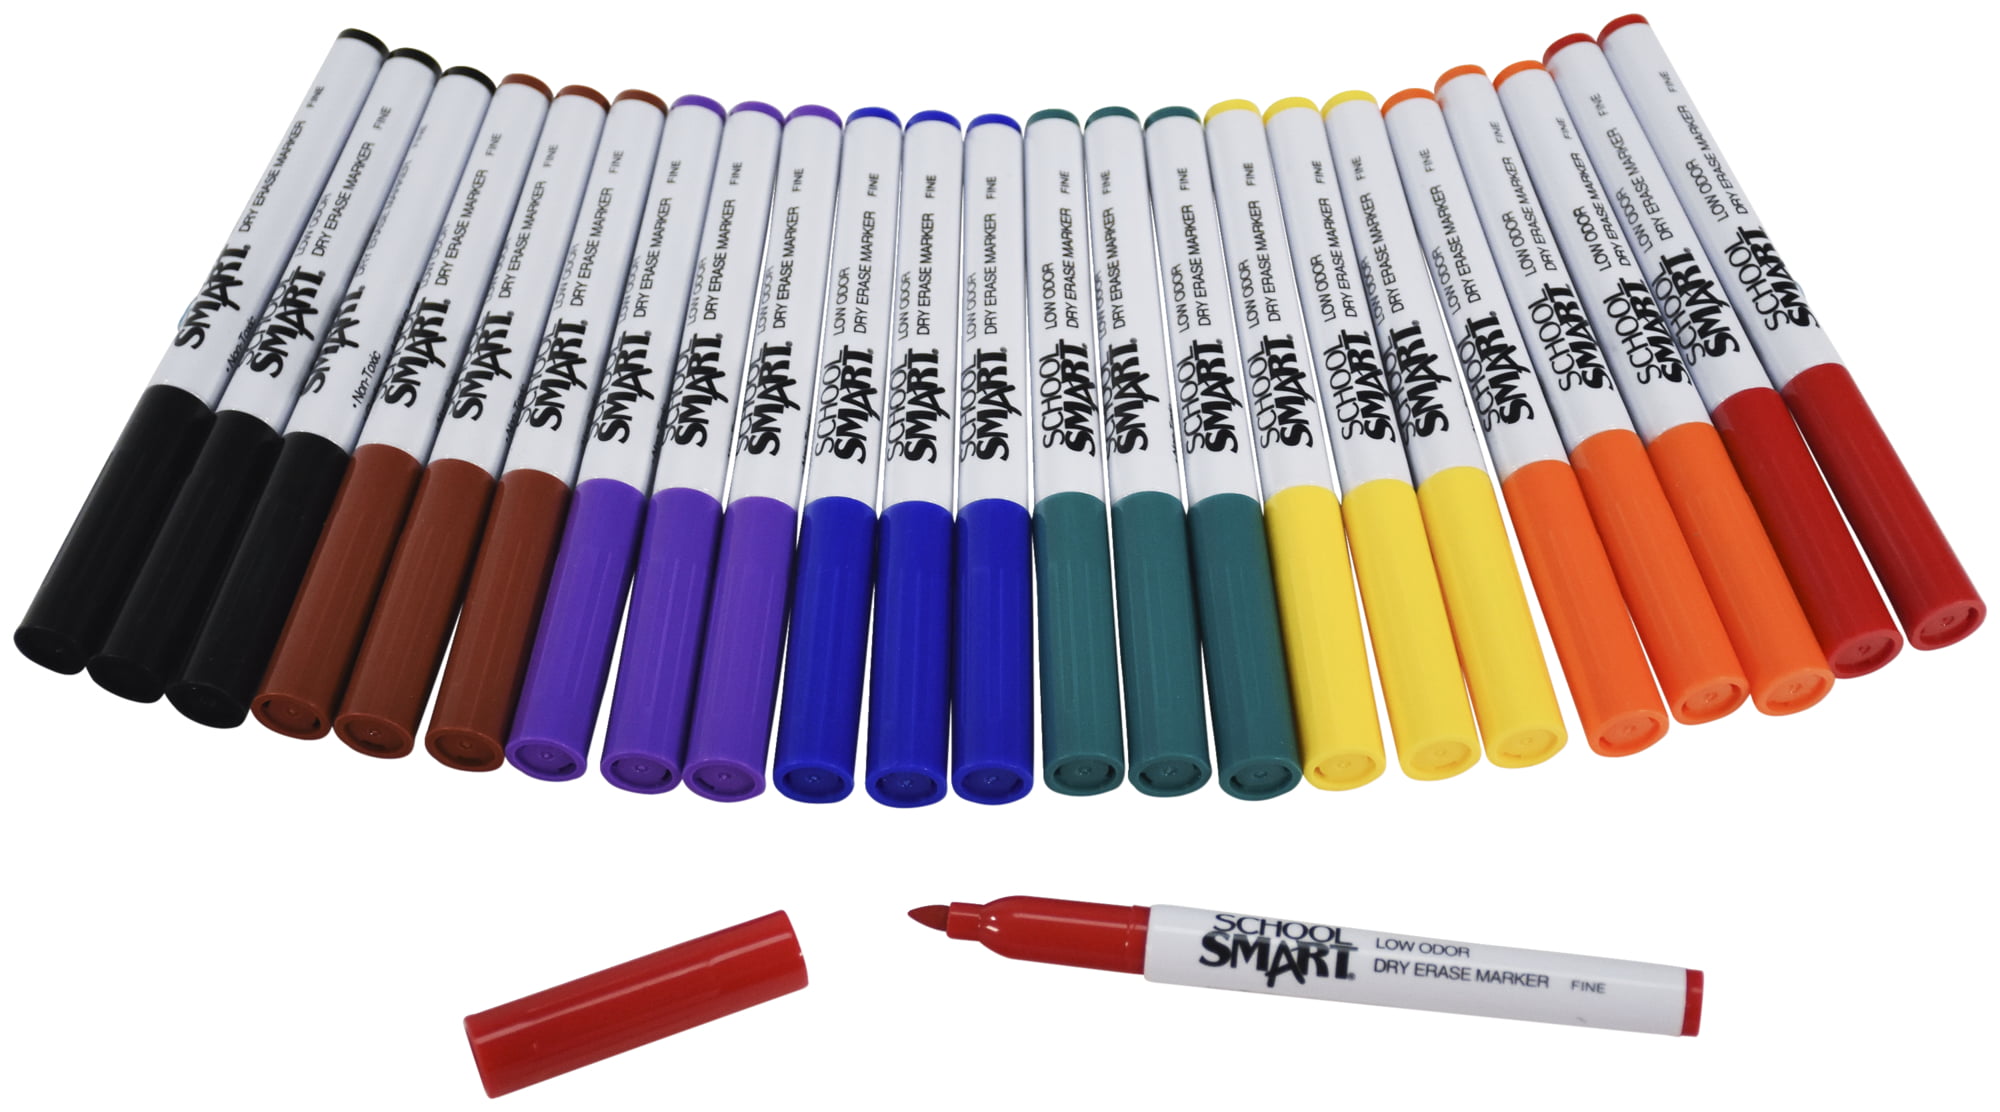 School Smart Dry Erase Pen Style Markers, Fine Tip, Assorted